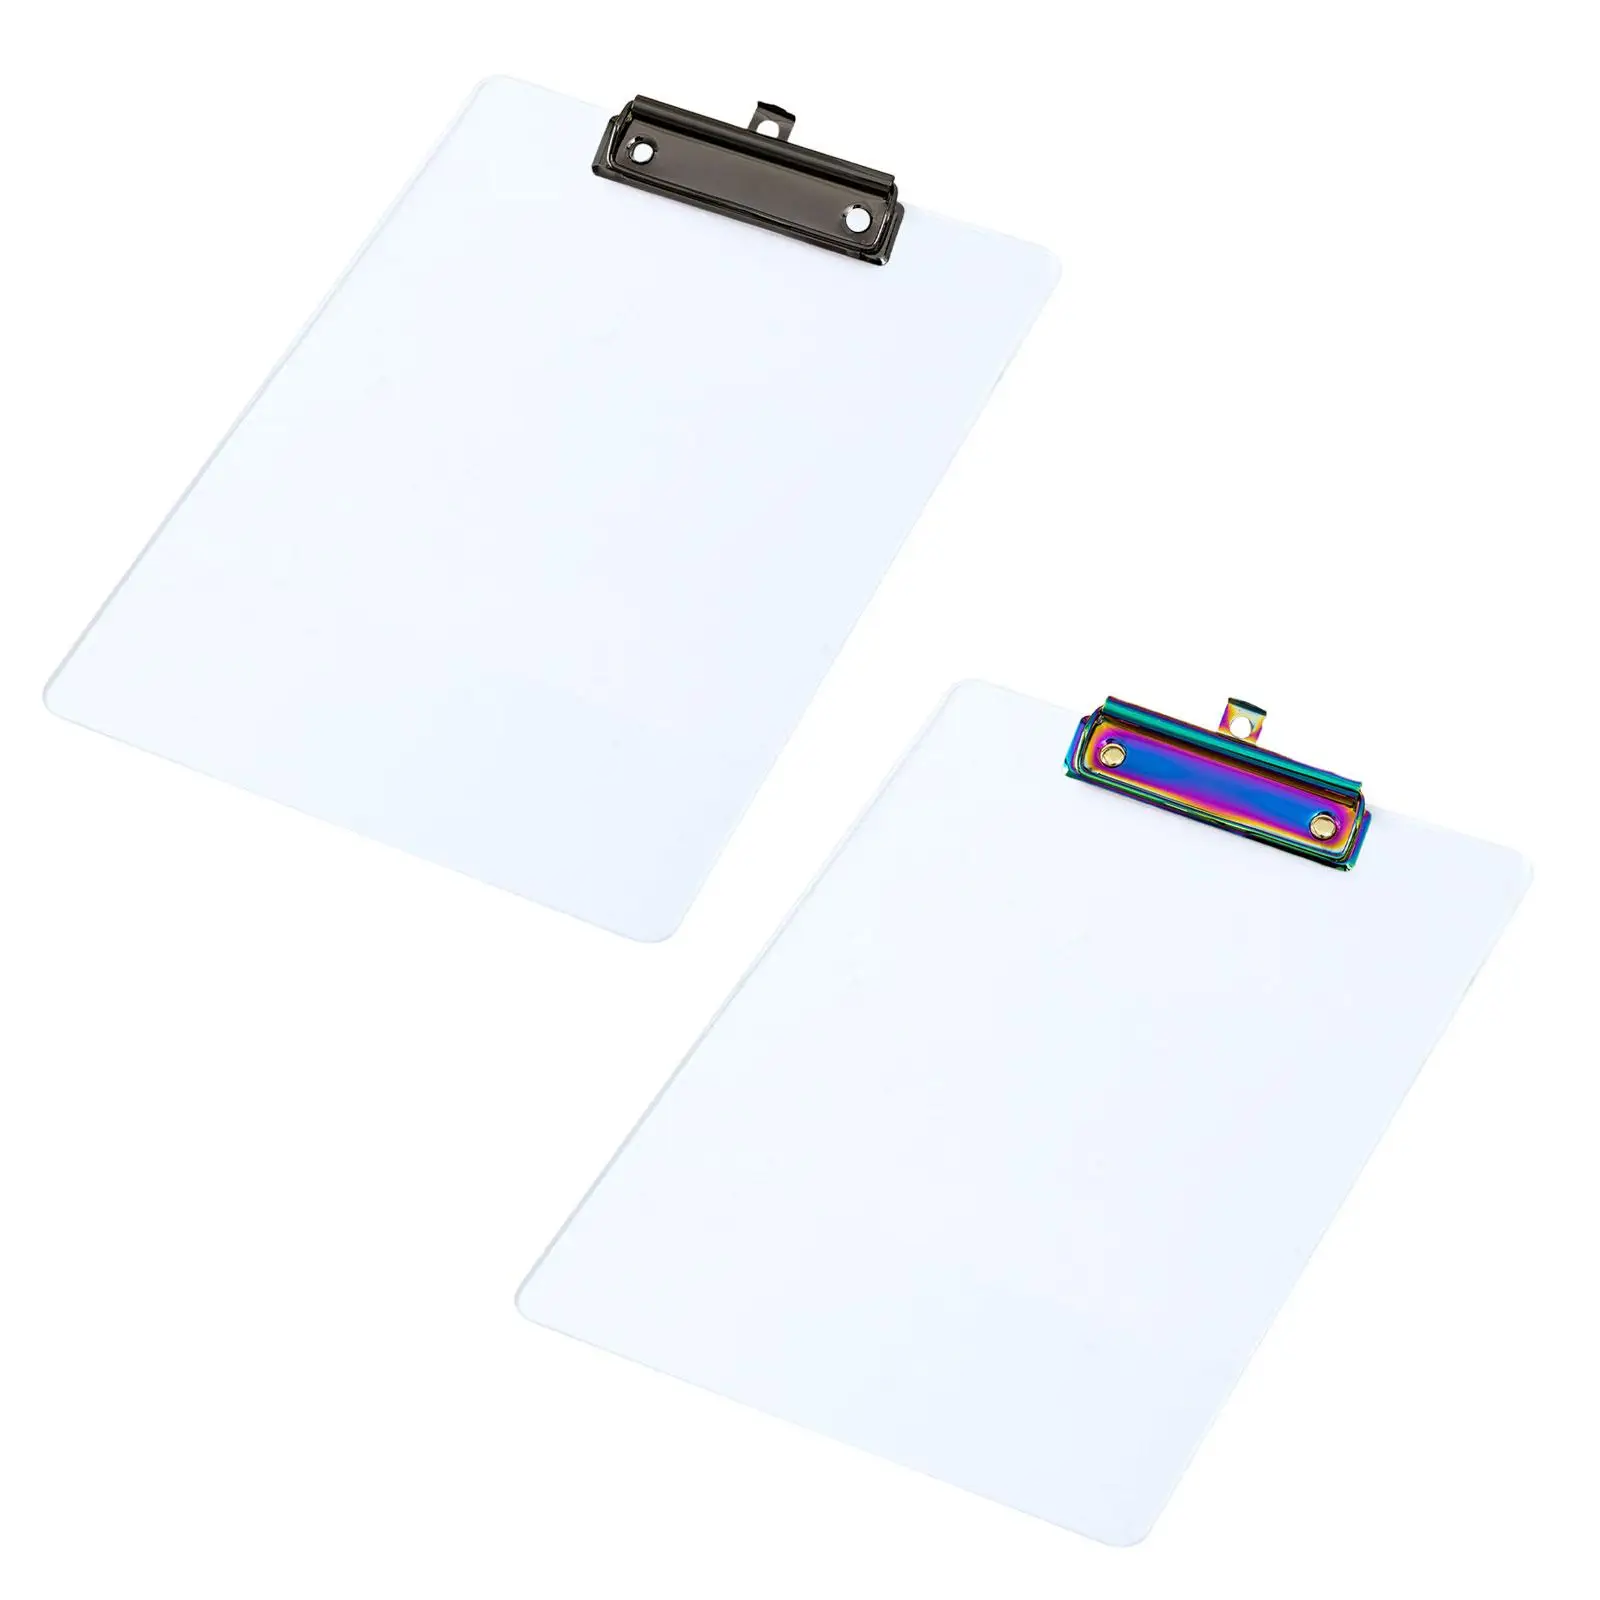 Clipboards Handwritten Folder Board Accessories Standard A4 Letter Size Splint for Homework A4 paper Test Paper Document